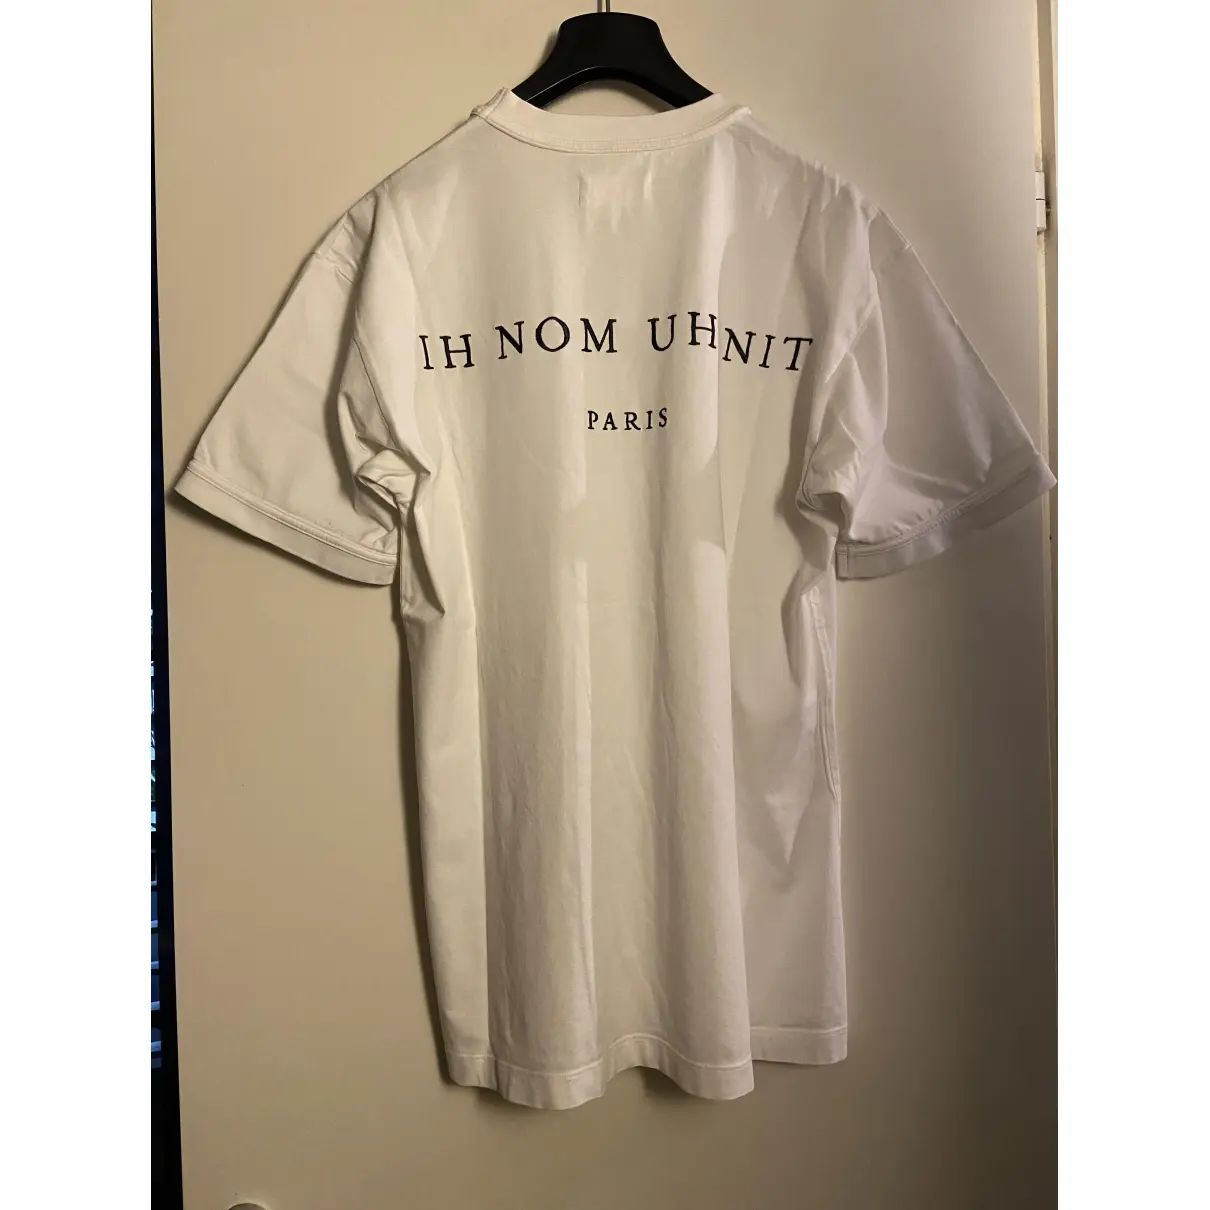 Buy ih nom uh nit White Cotton T-shirt online